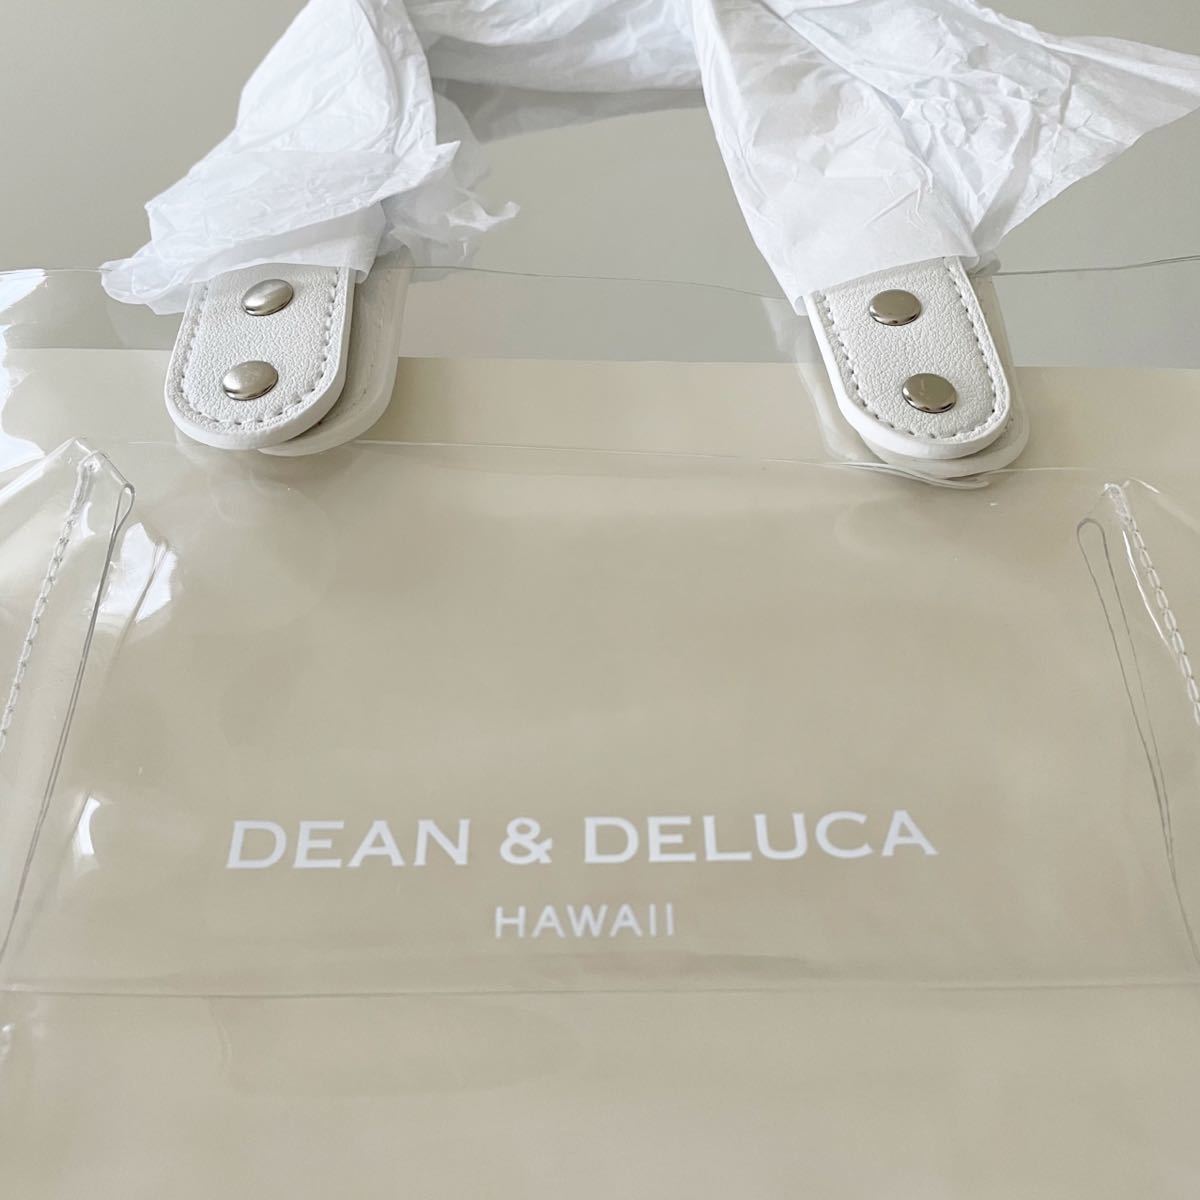 DEAN&DELUCA Гаваи ограничение винил большая сумка серый новый товар Гаваи Dean and Dell -ka